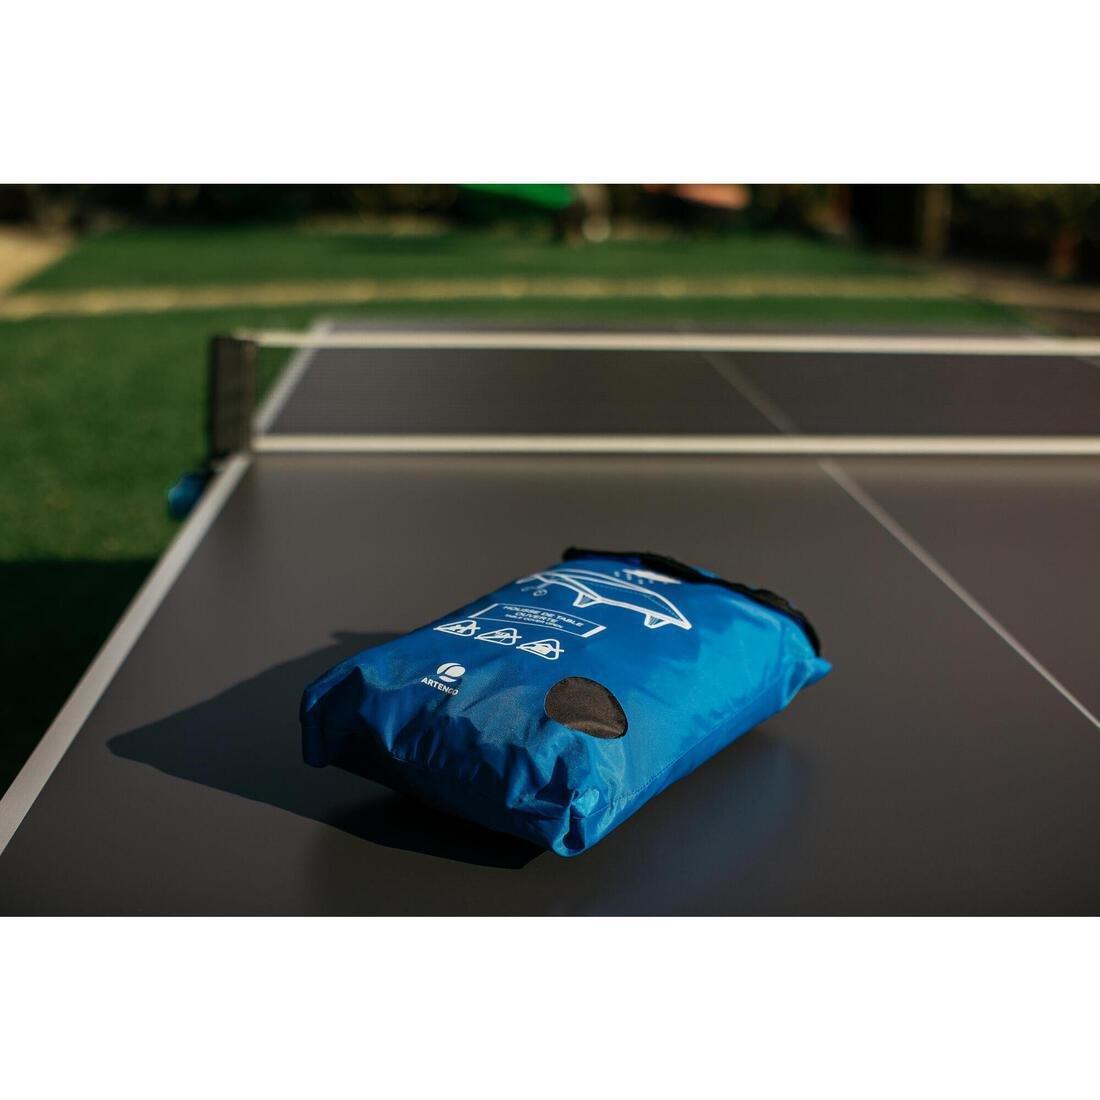 PONGORI - Table Tennis Open Table Cover, Black